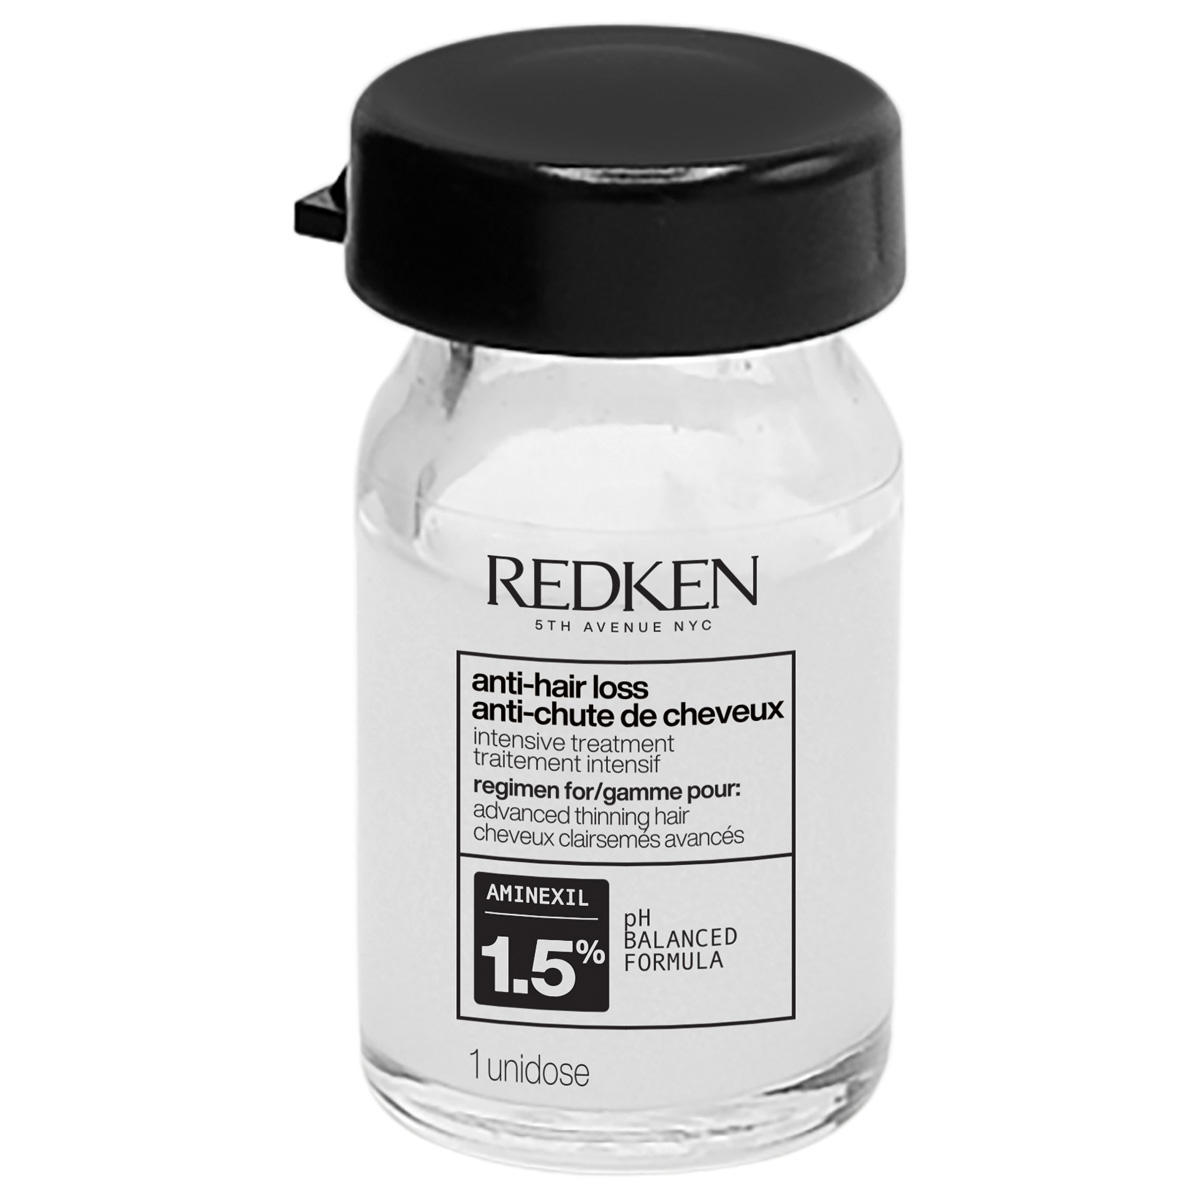 Redken cerafill maximize anti-hair loss intensive treatment Envase con 10 x 6 ml - 2